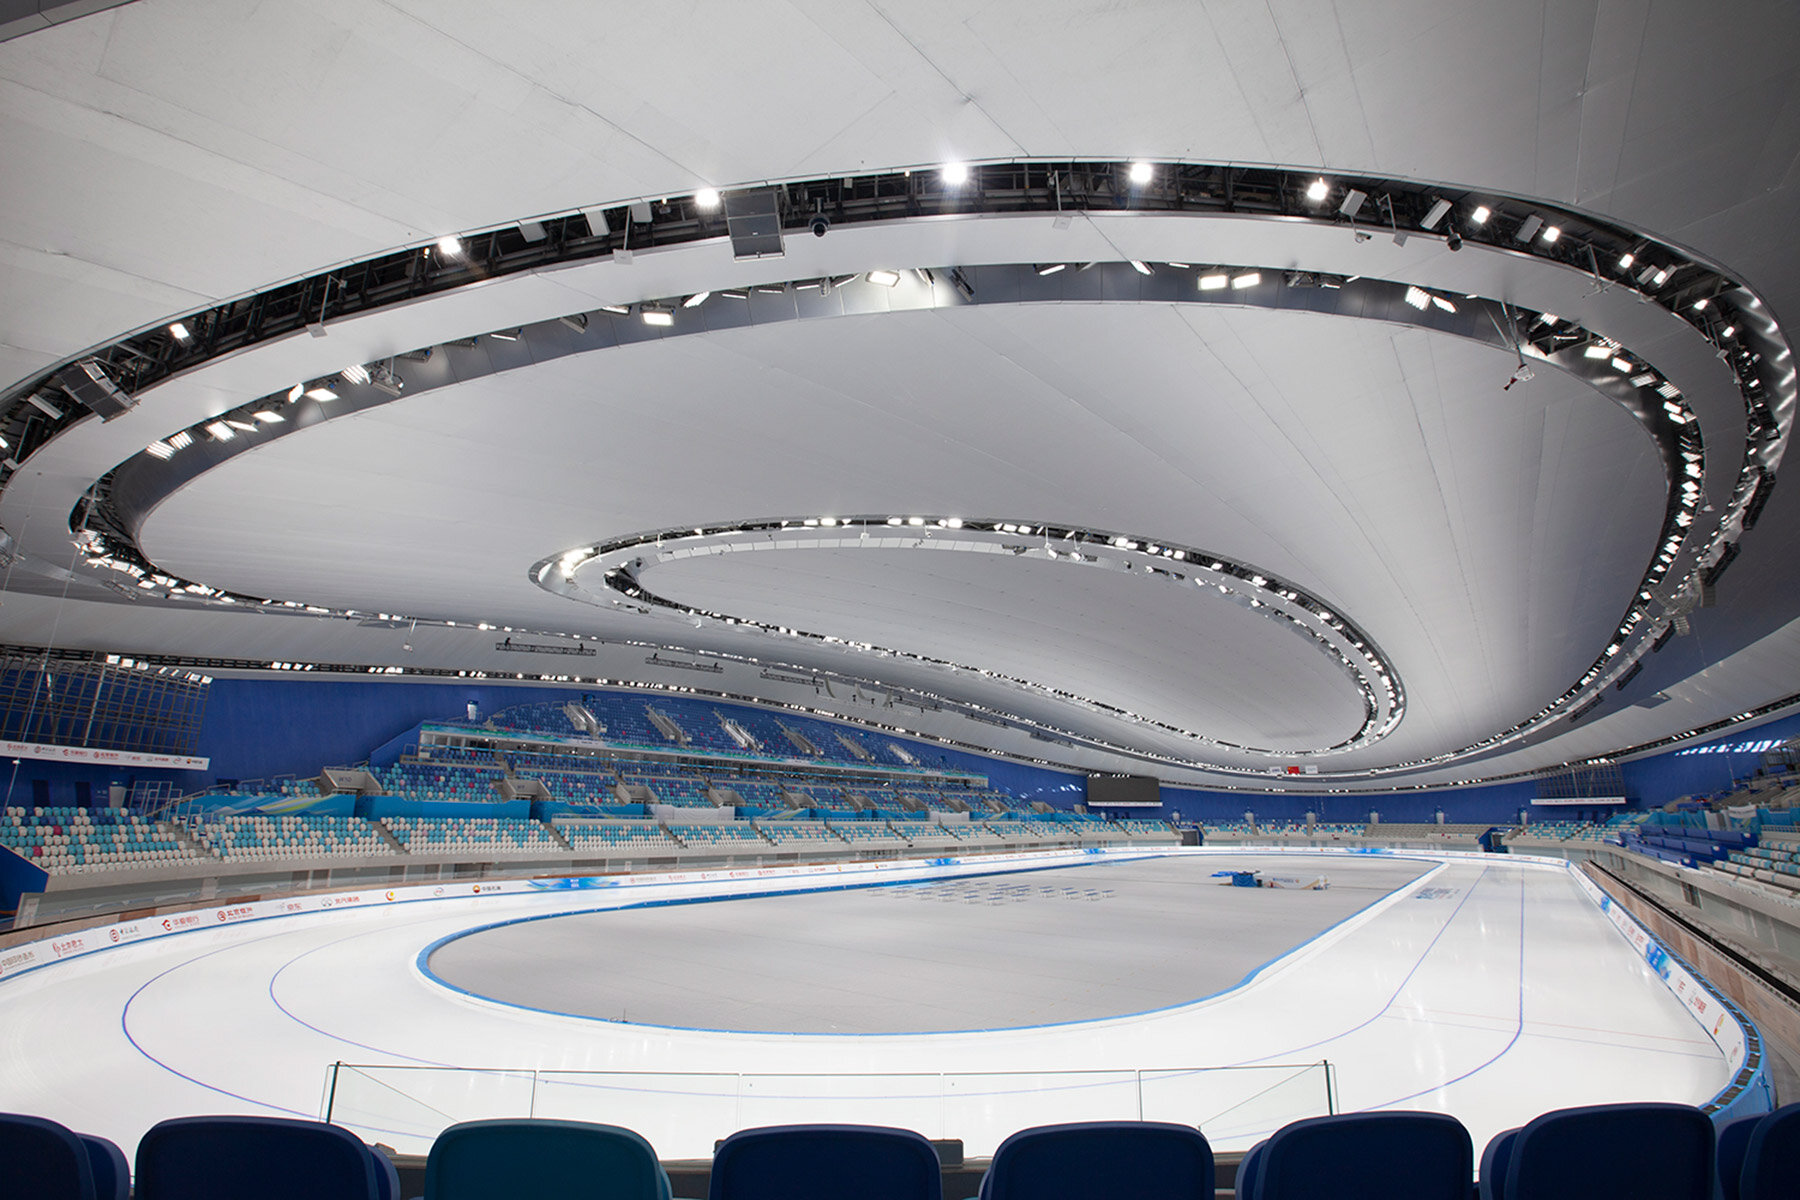 Olympic Winter Games Beijing 2022, ART ON 158-METER ICE